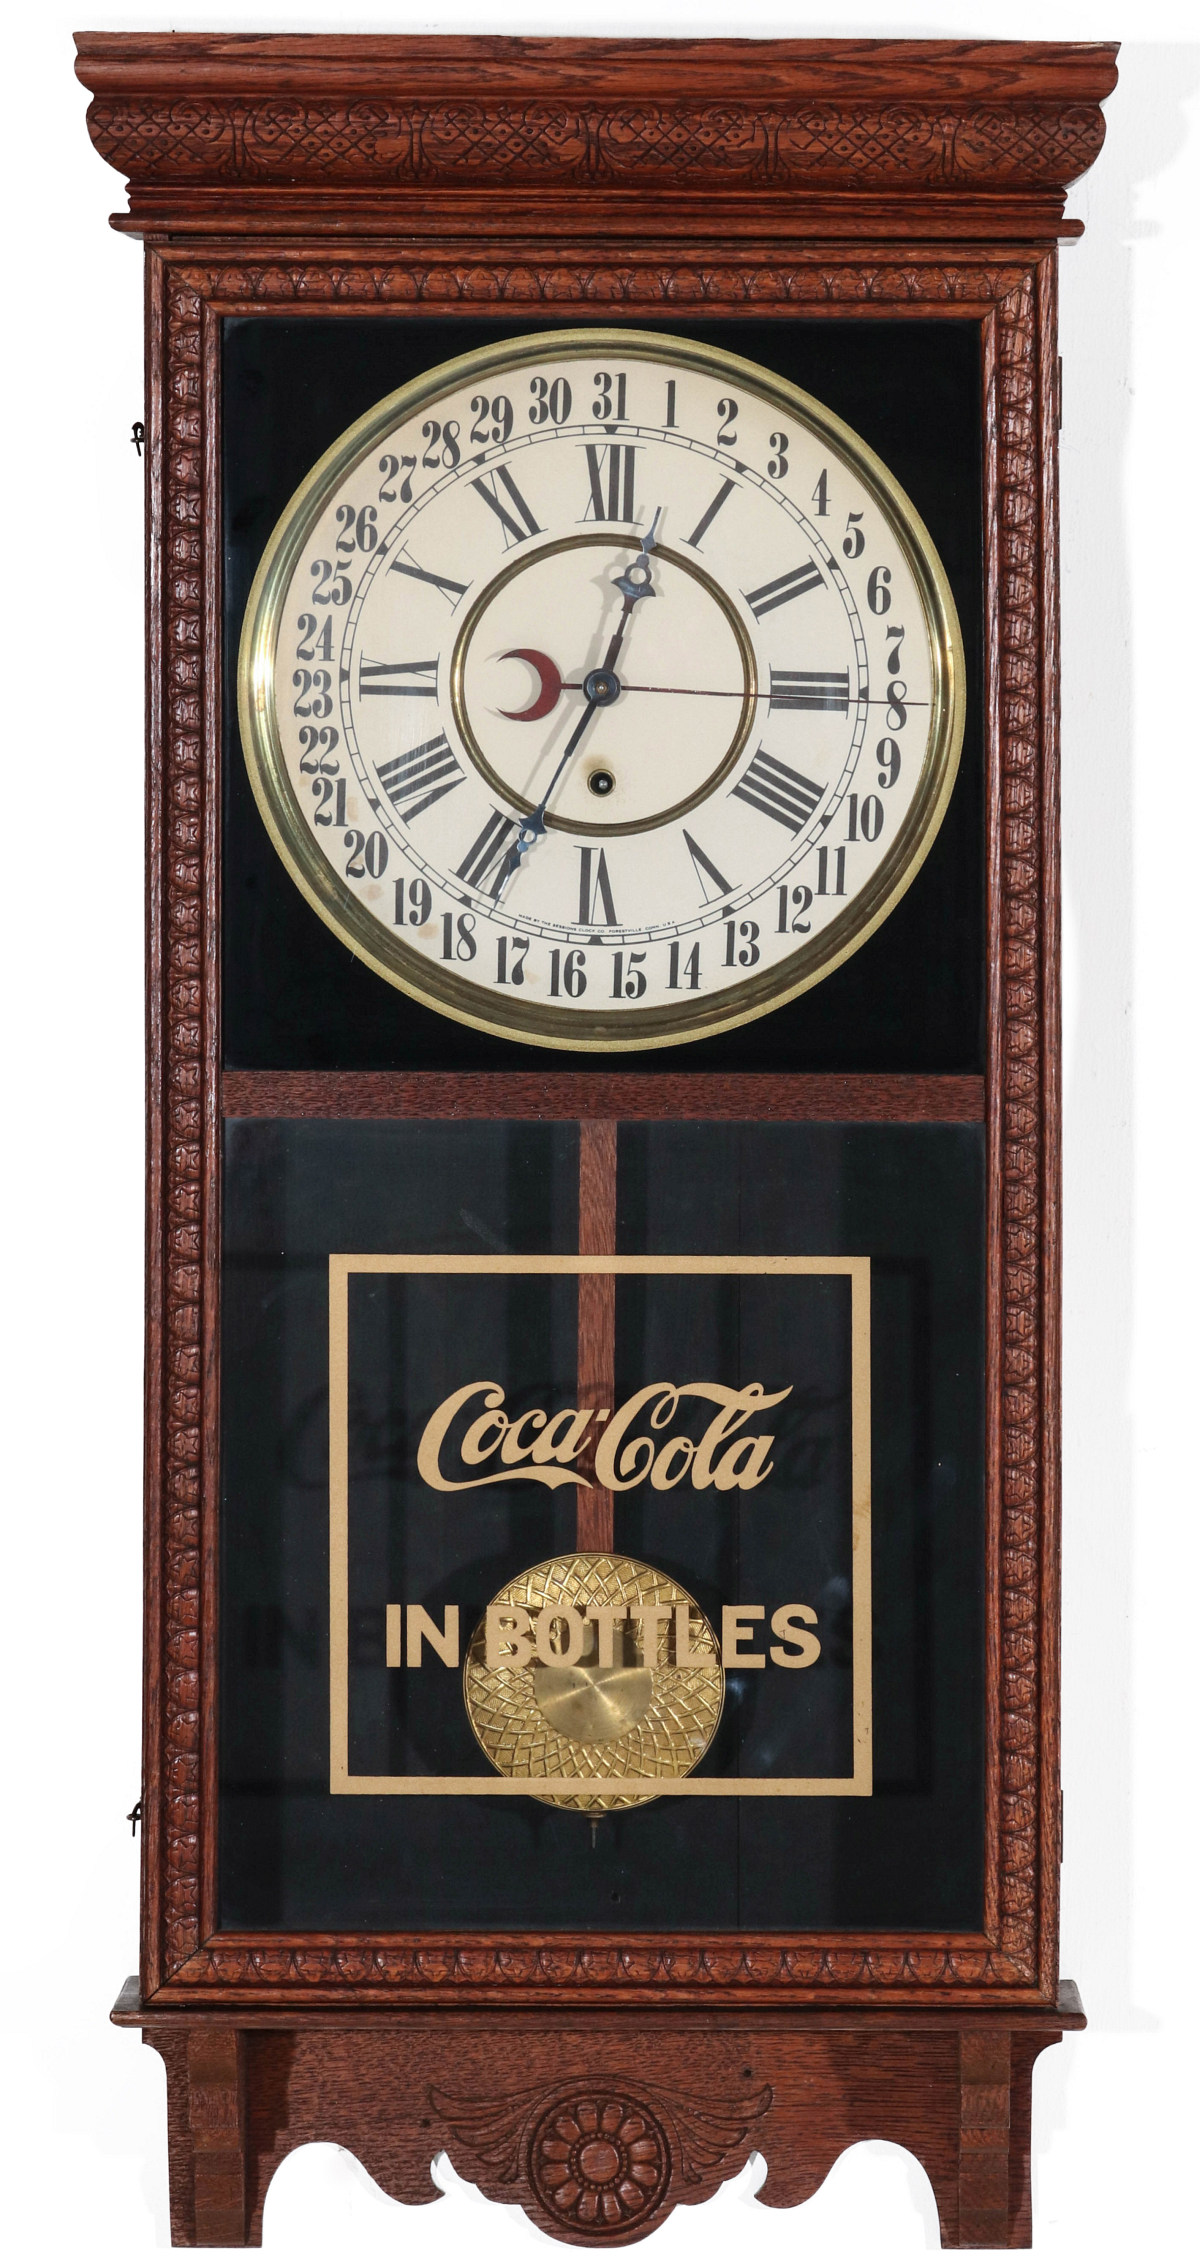 AN INGRAHAM CALENDAR CLOCK WITH COCA-COLA ADVERTISING